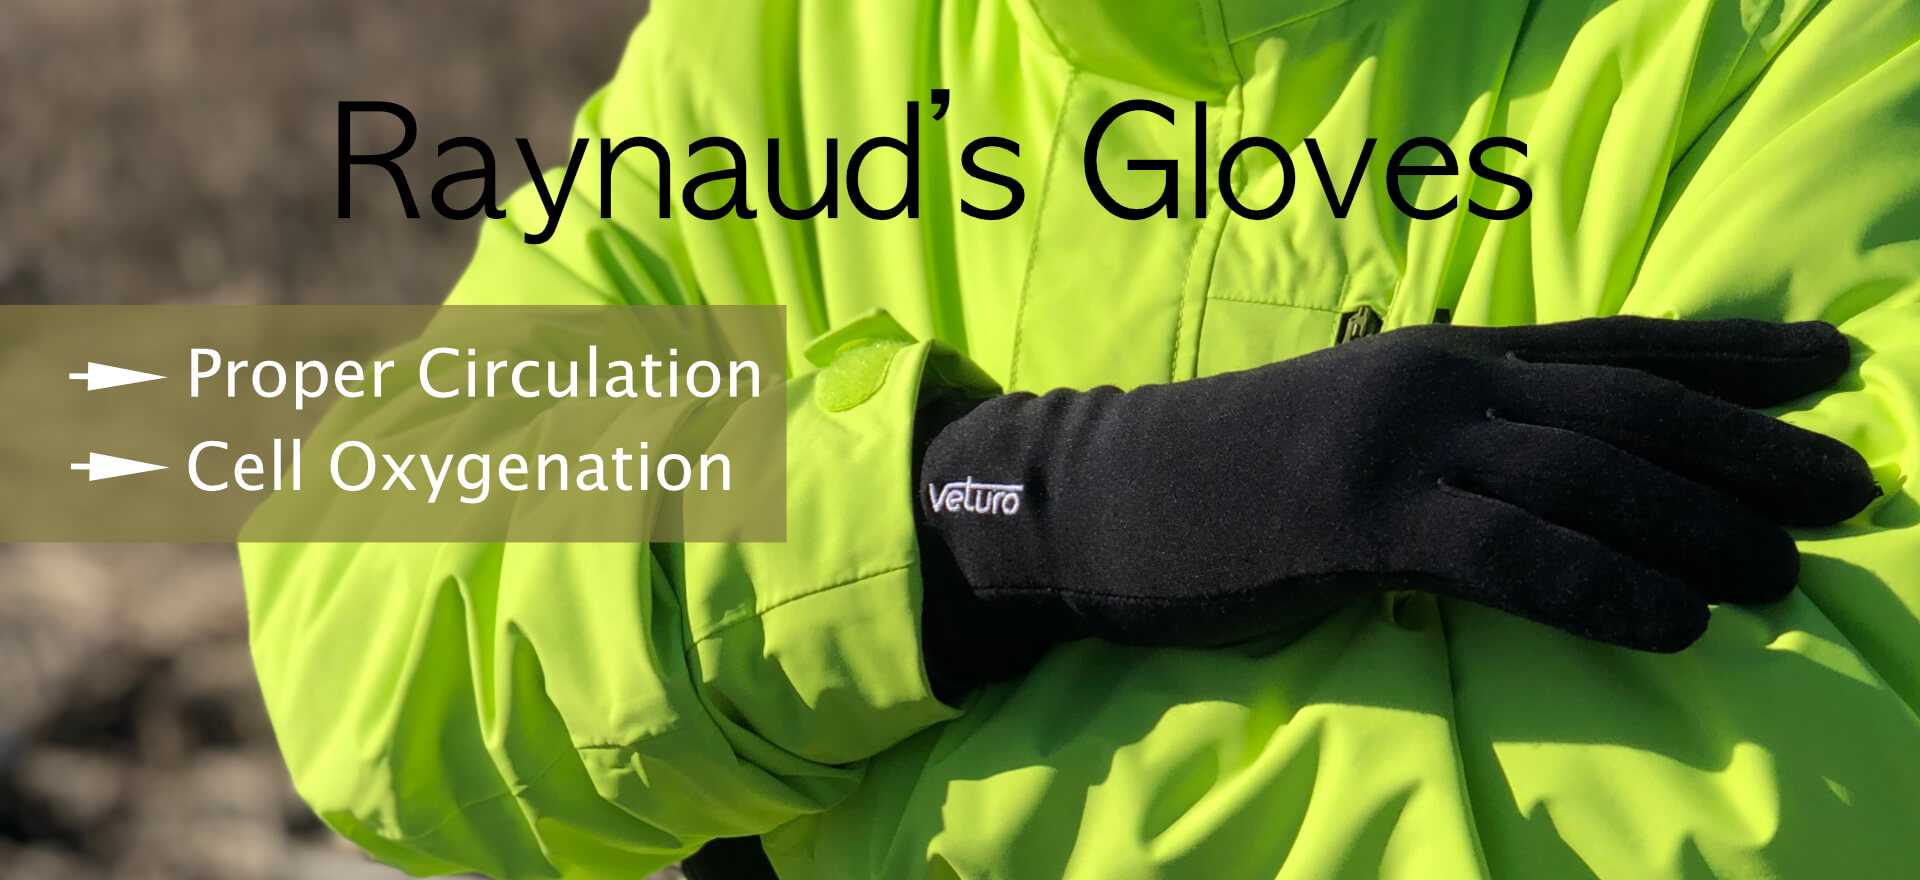 Raynaud's Phenomenon Gloves - Help Relieve Cold Hand Symptoms